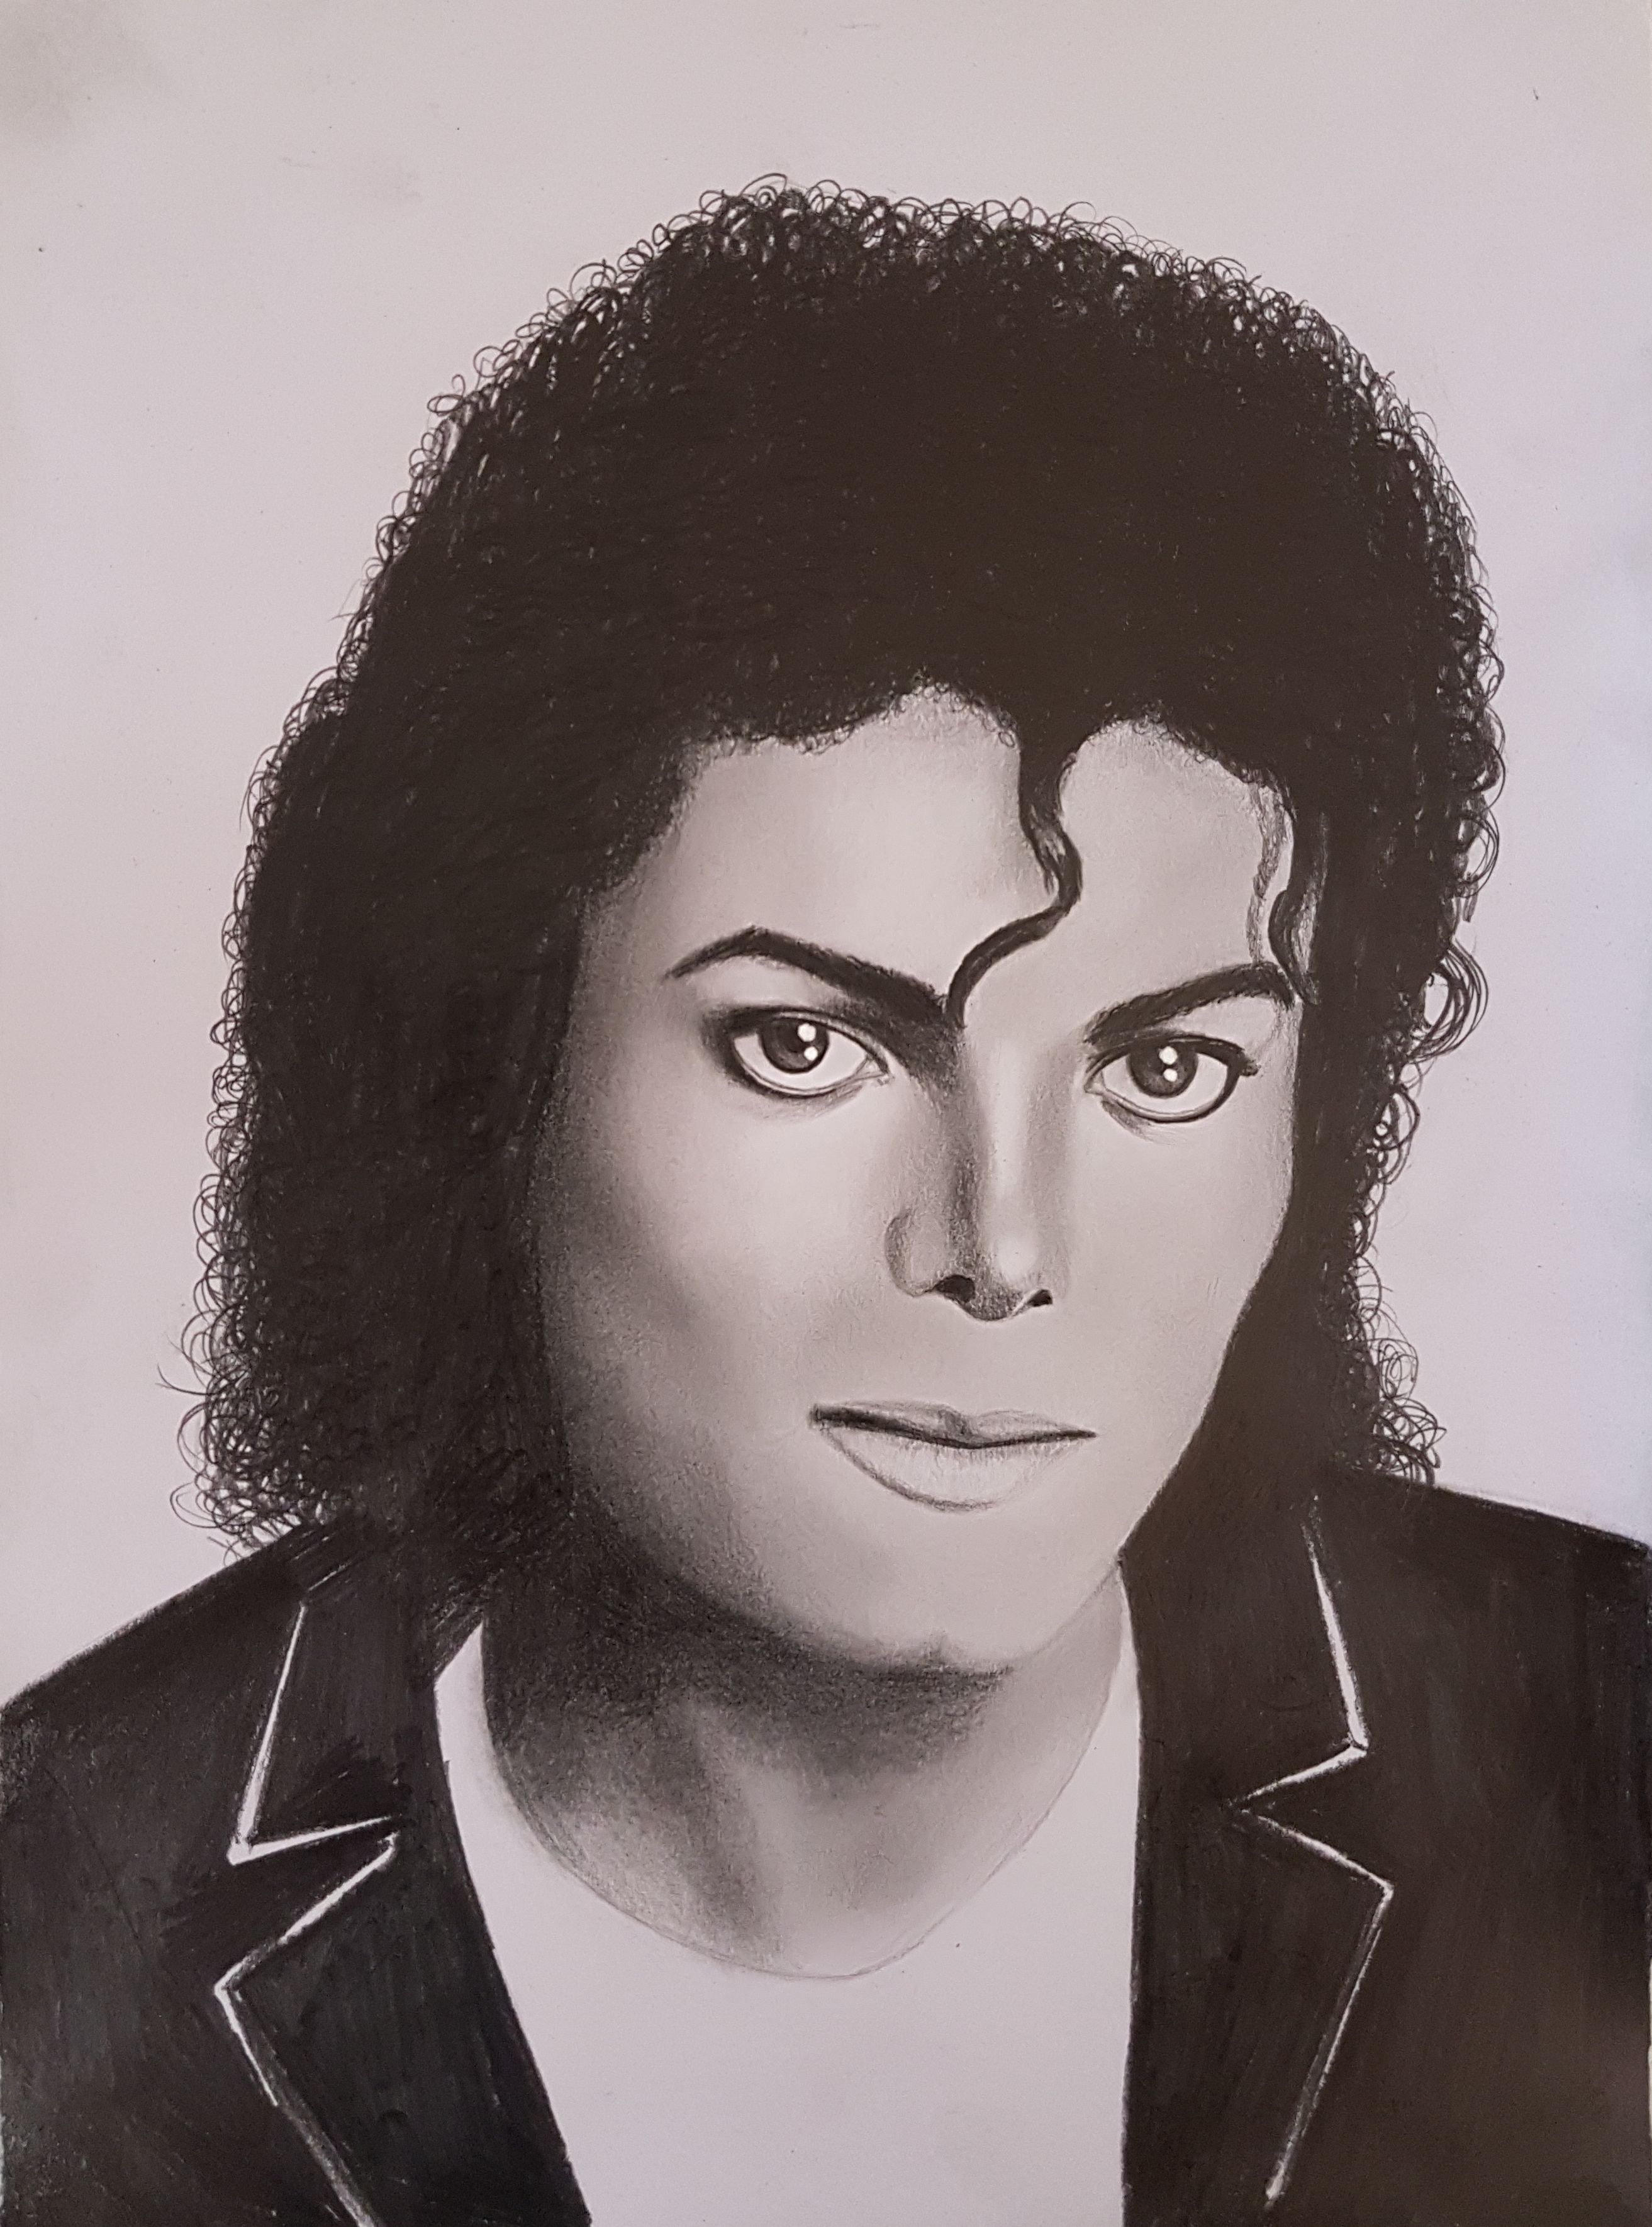 Charcoal sketch tribute to the King of Pop Michael Jackson on his birth  anniversary by artist Mridula Chury